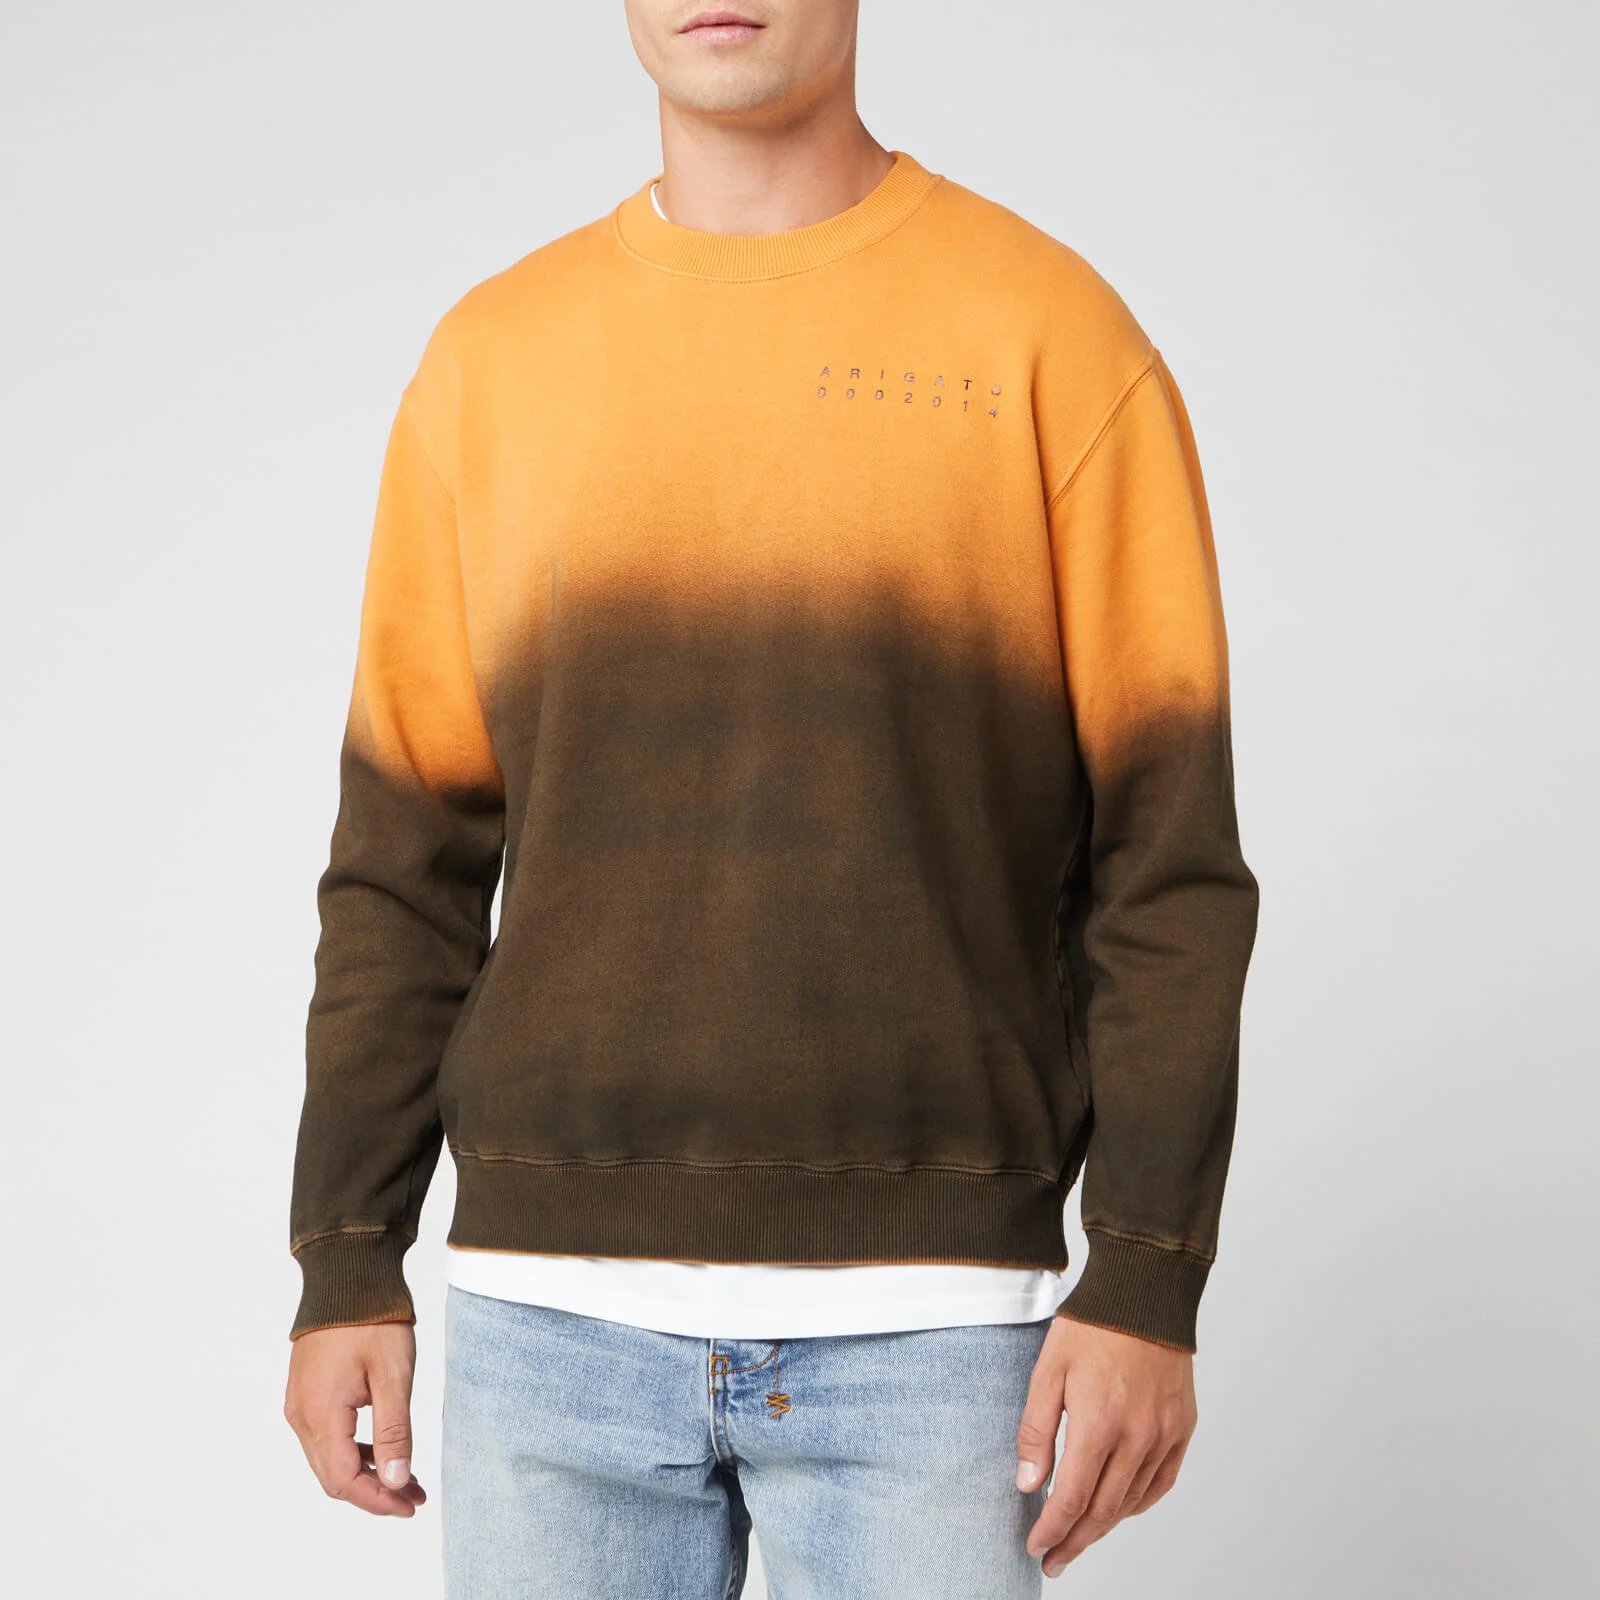 Axel Arigato Men's Karma Crew Neck Sweatshirt - Orange/Brown Image 1